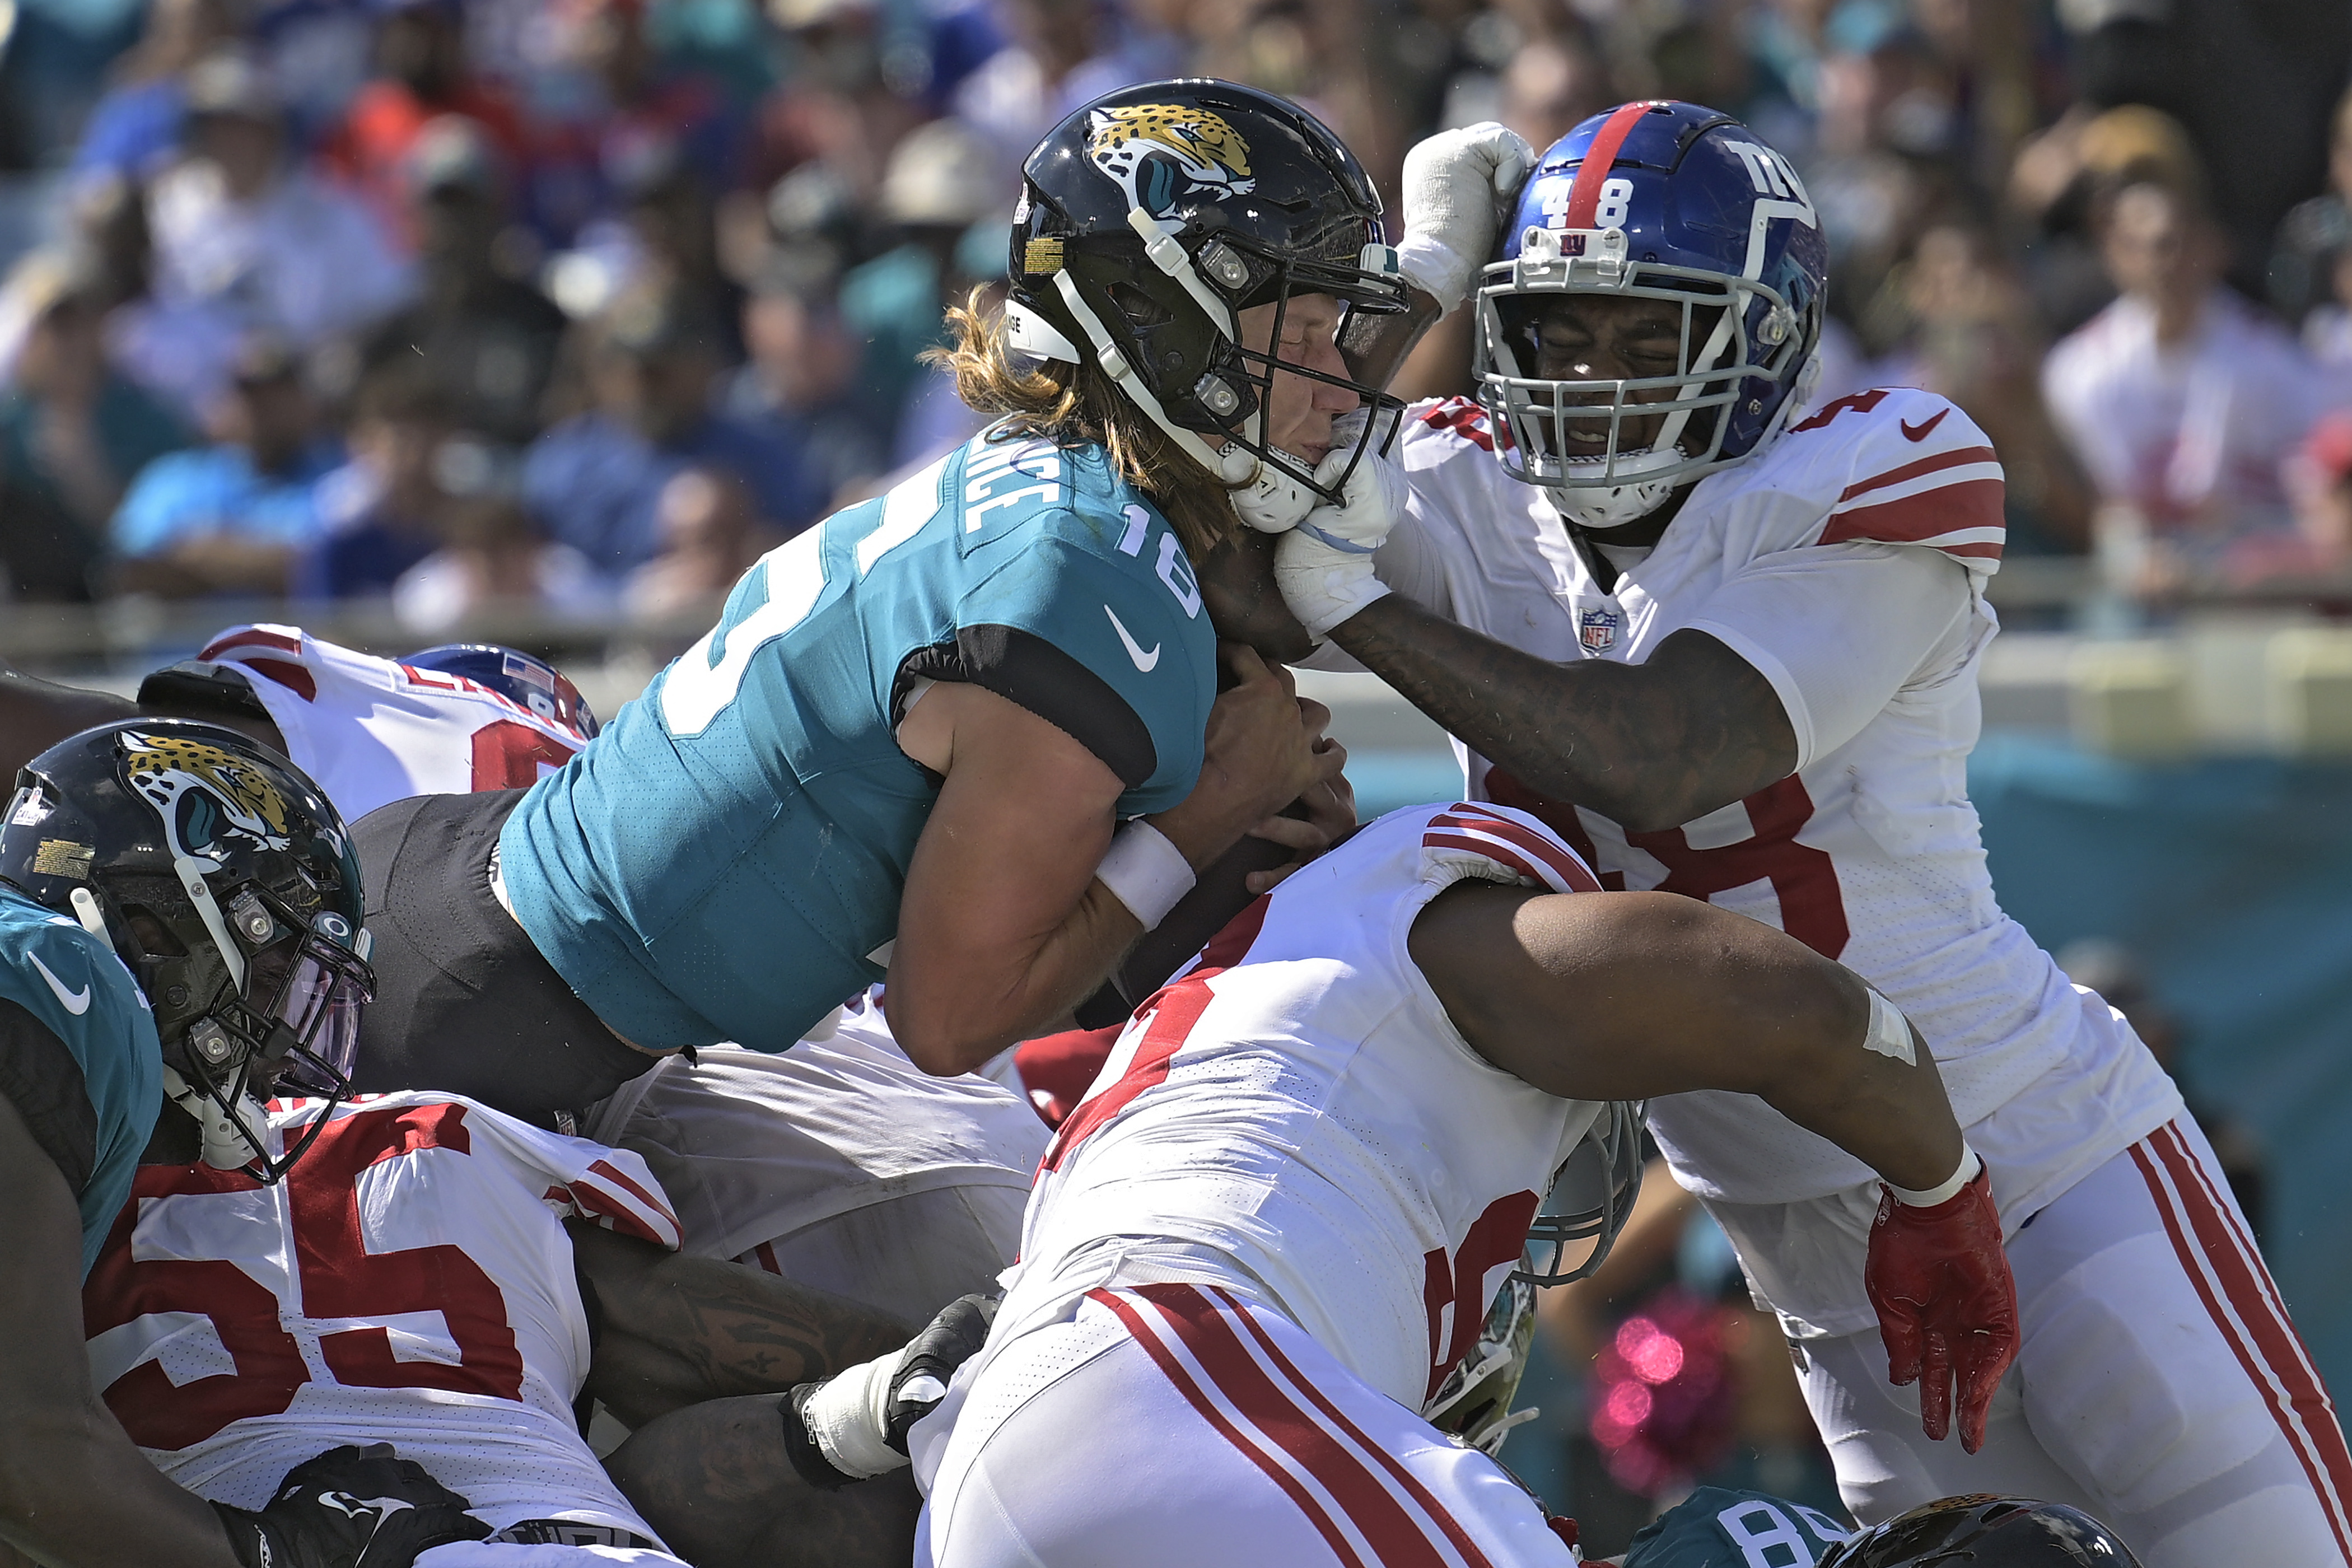 New York Giants vs. Jacksonville Jaguars: How to Watch, Listen